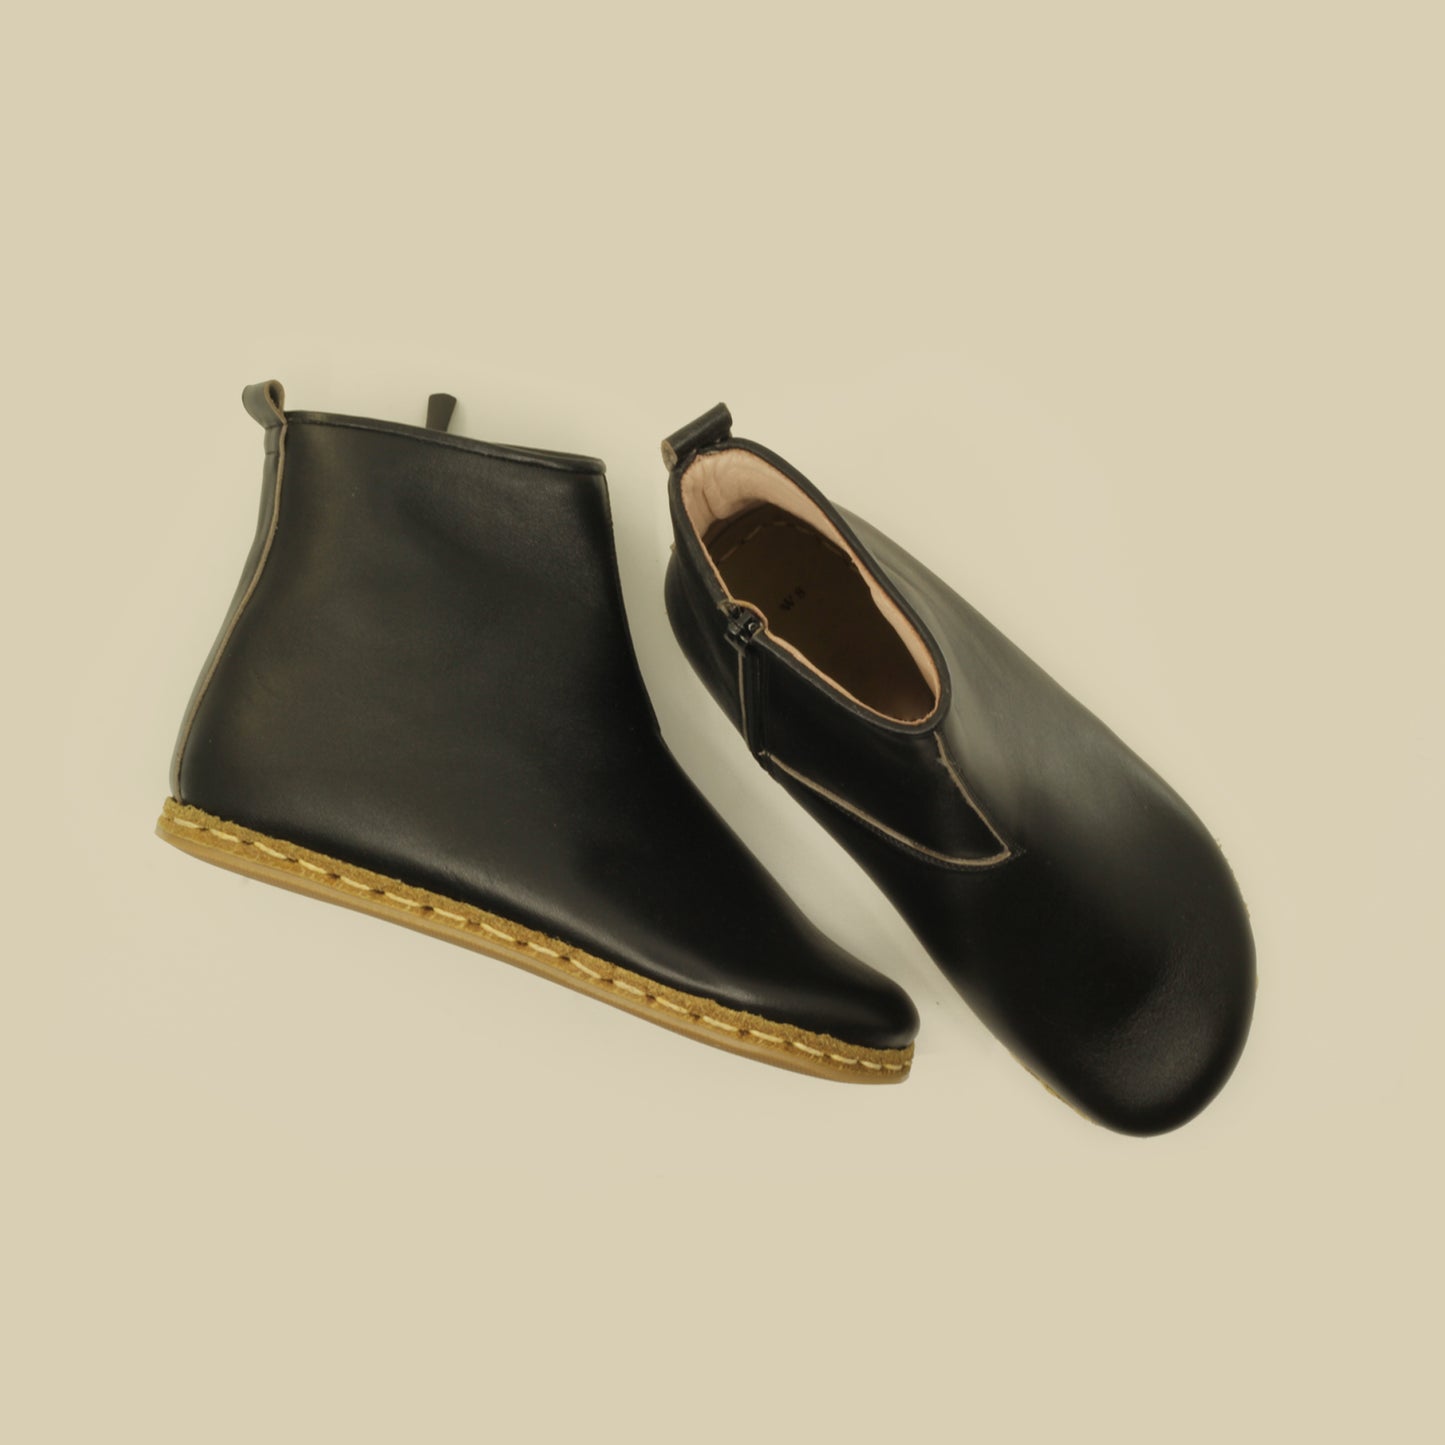 Black - Zero Drop - Ankle Barefoot With Zipper Women Boots - Rubber Sole